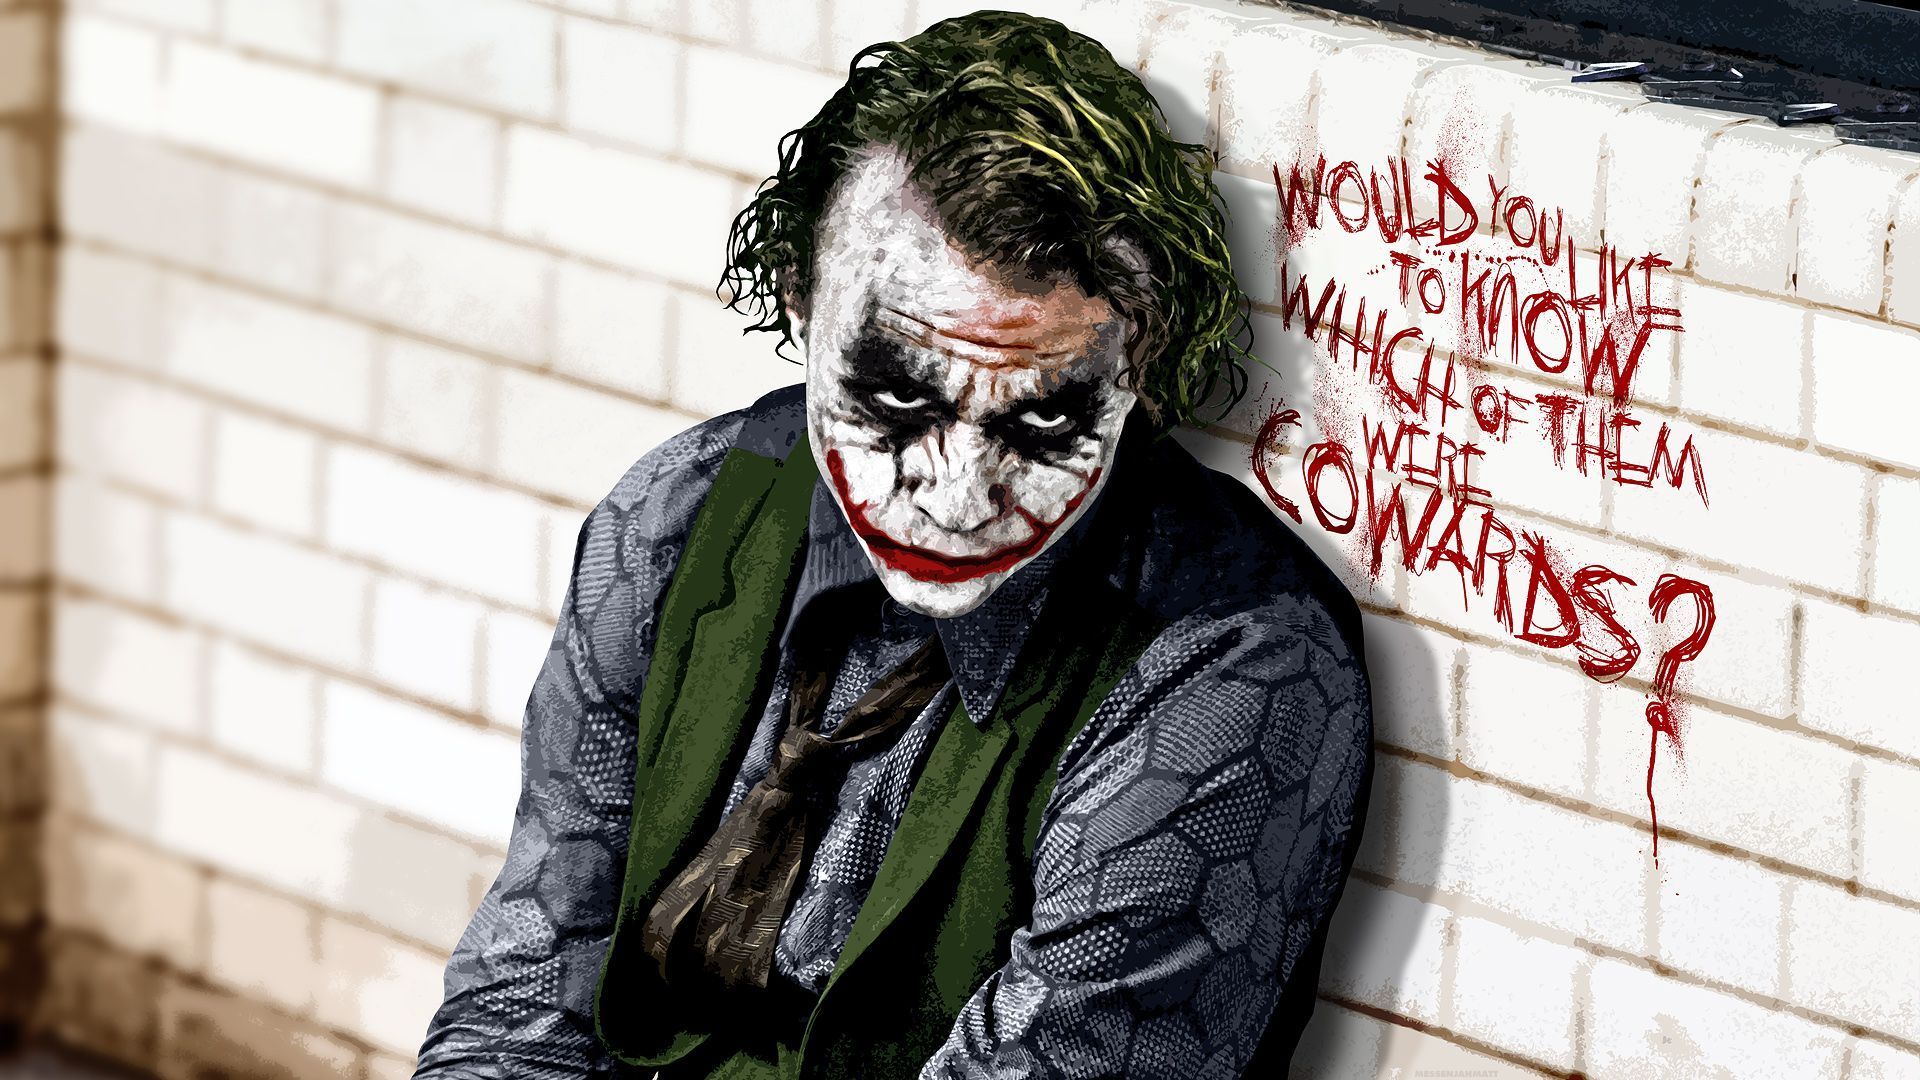 The Joker wallpapers